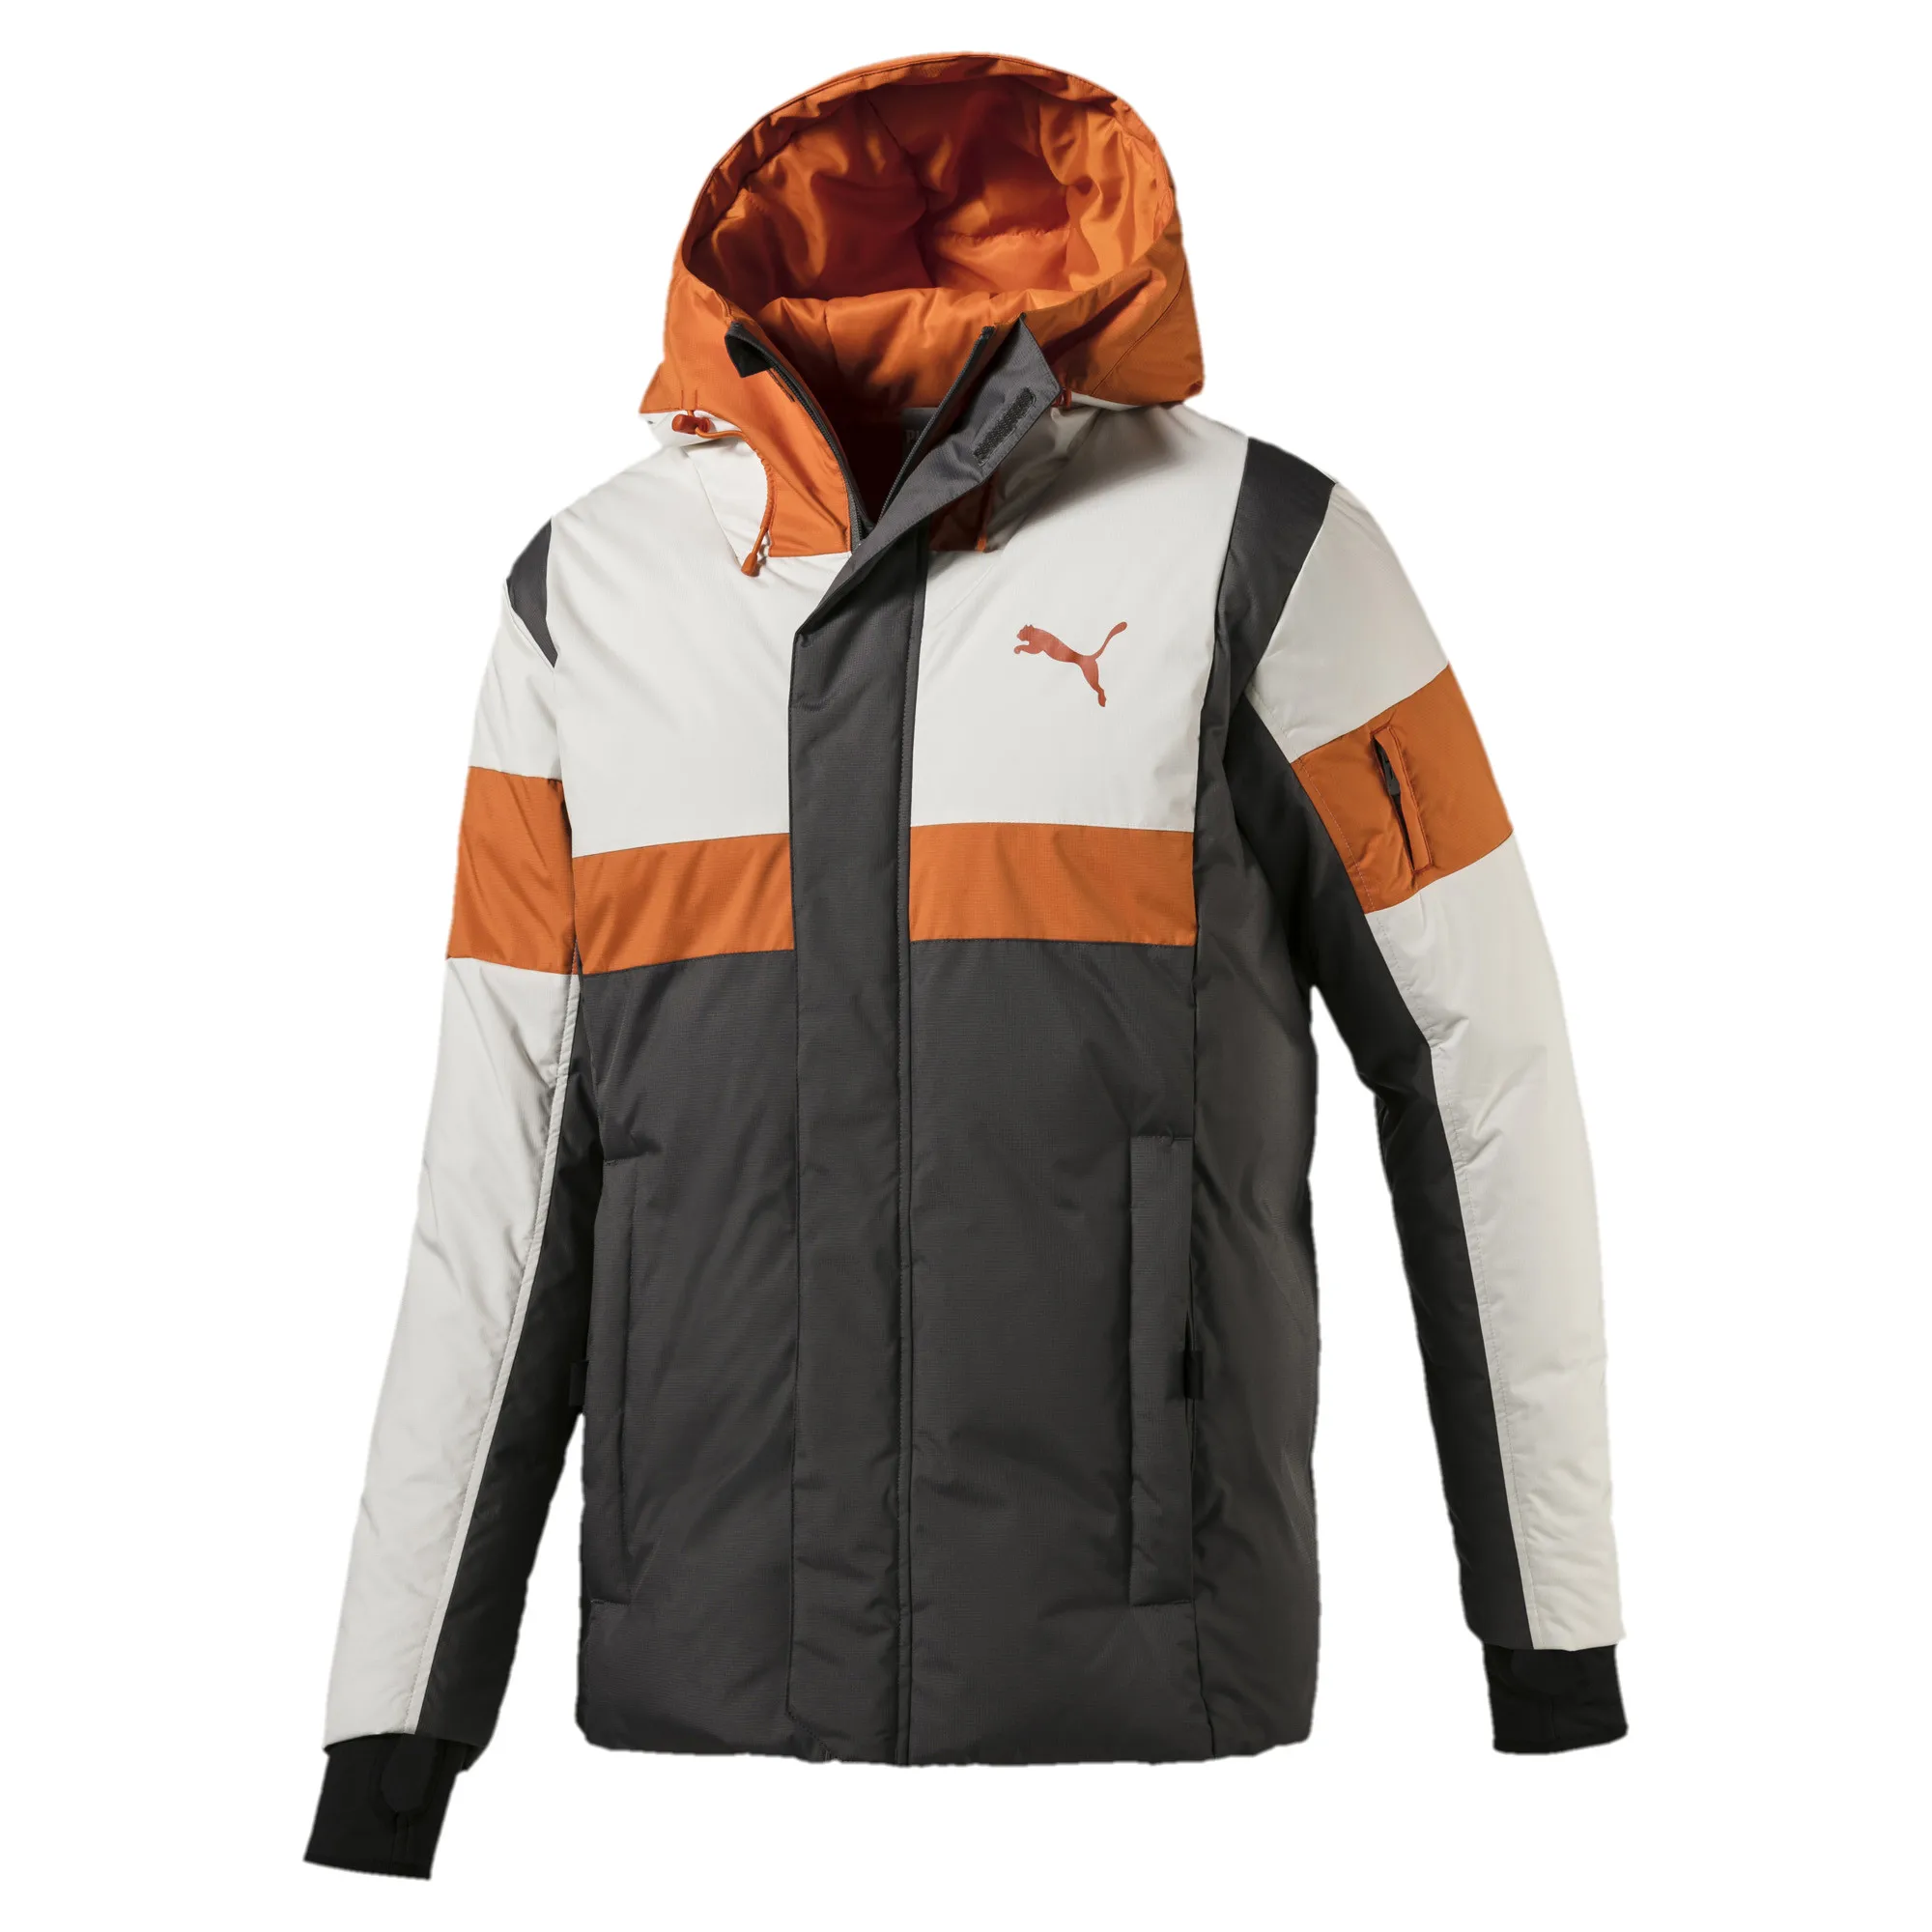 Jacket Puma 650 Protective Down Men's Clothing Winter Sportswear Male - Coats - AliExpress